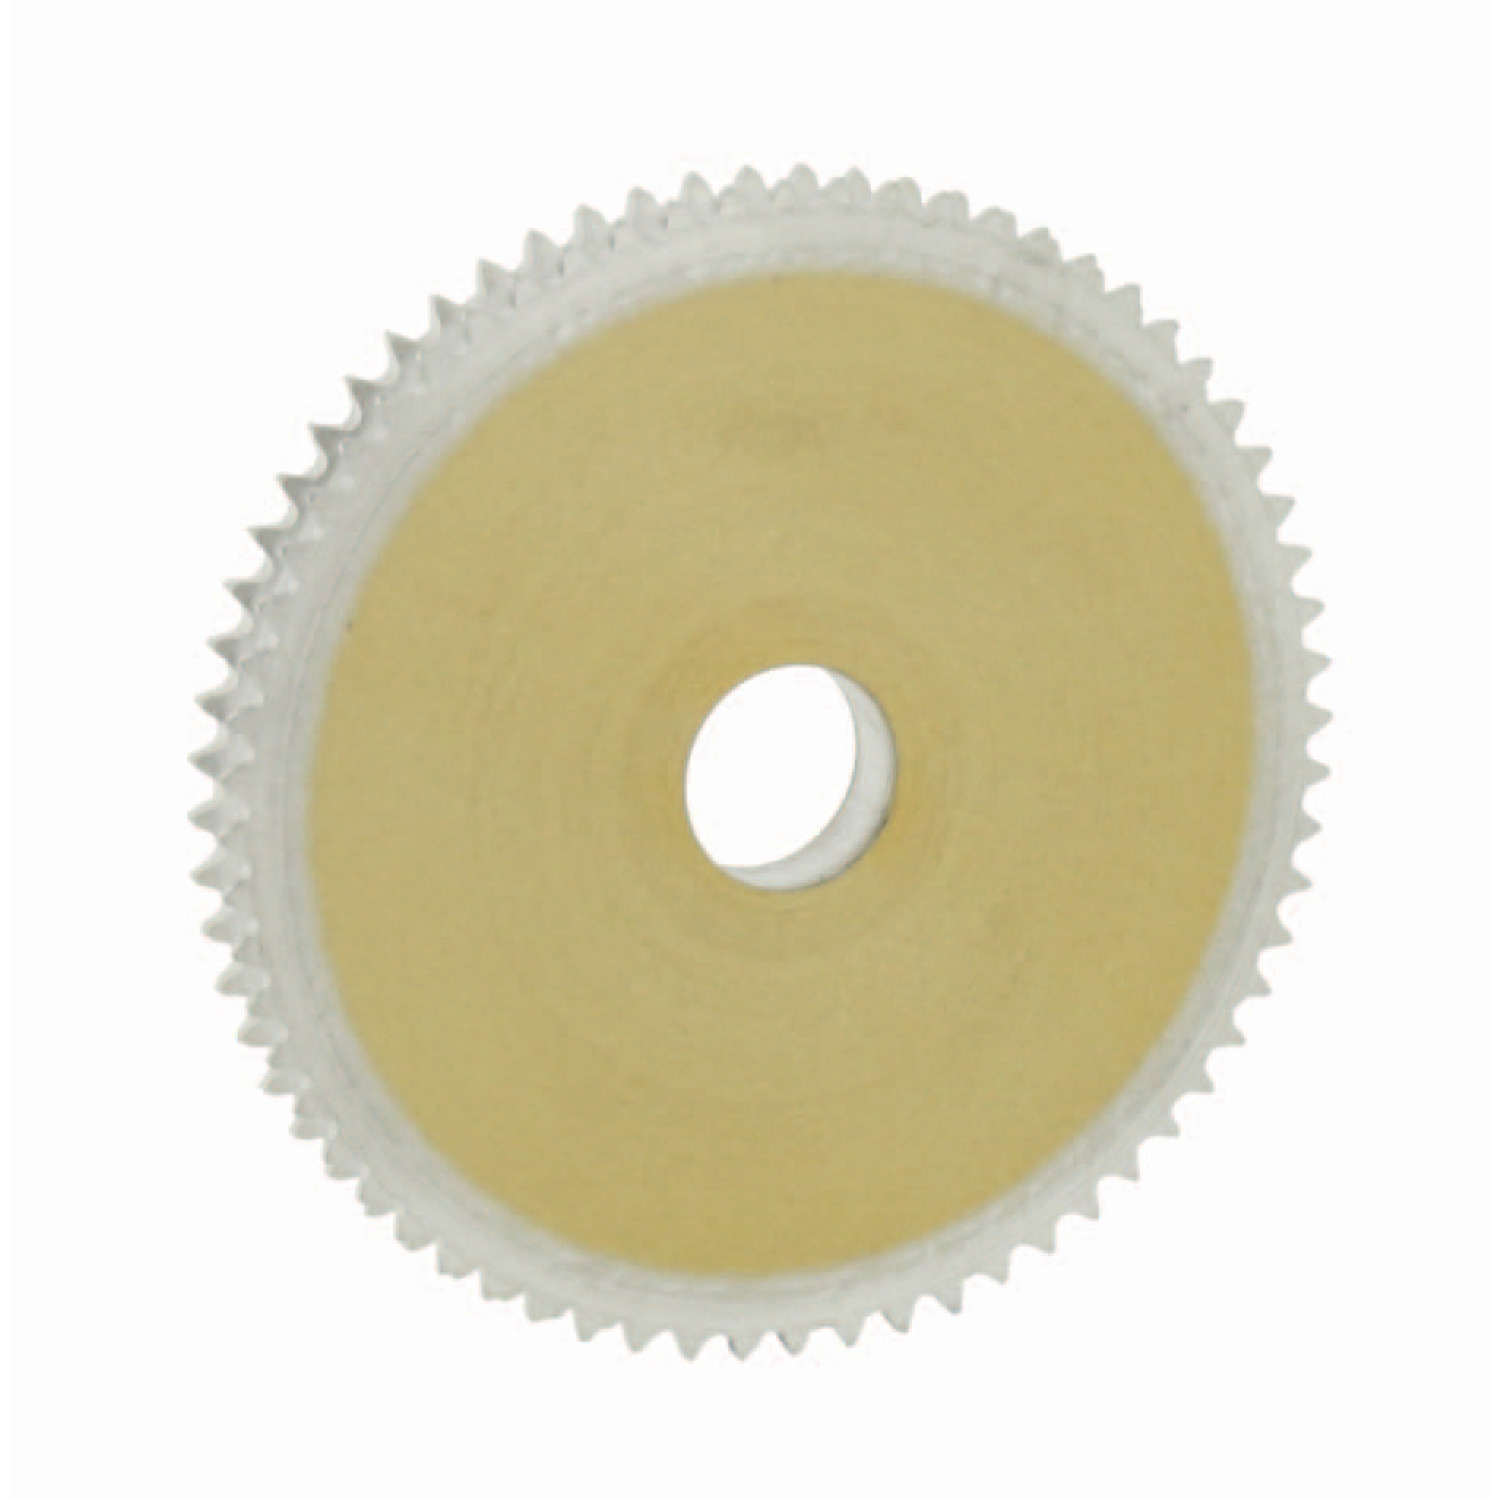 Product R1052, 3-D Pulleys - aluminium, hubless 4mm nominal circular pitch / 